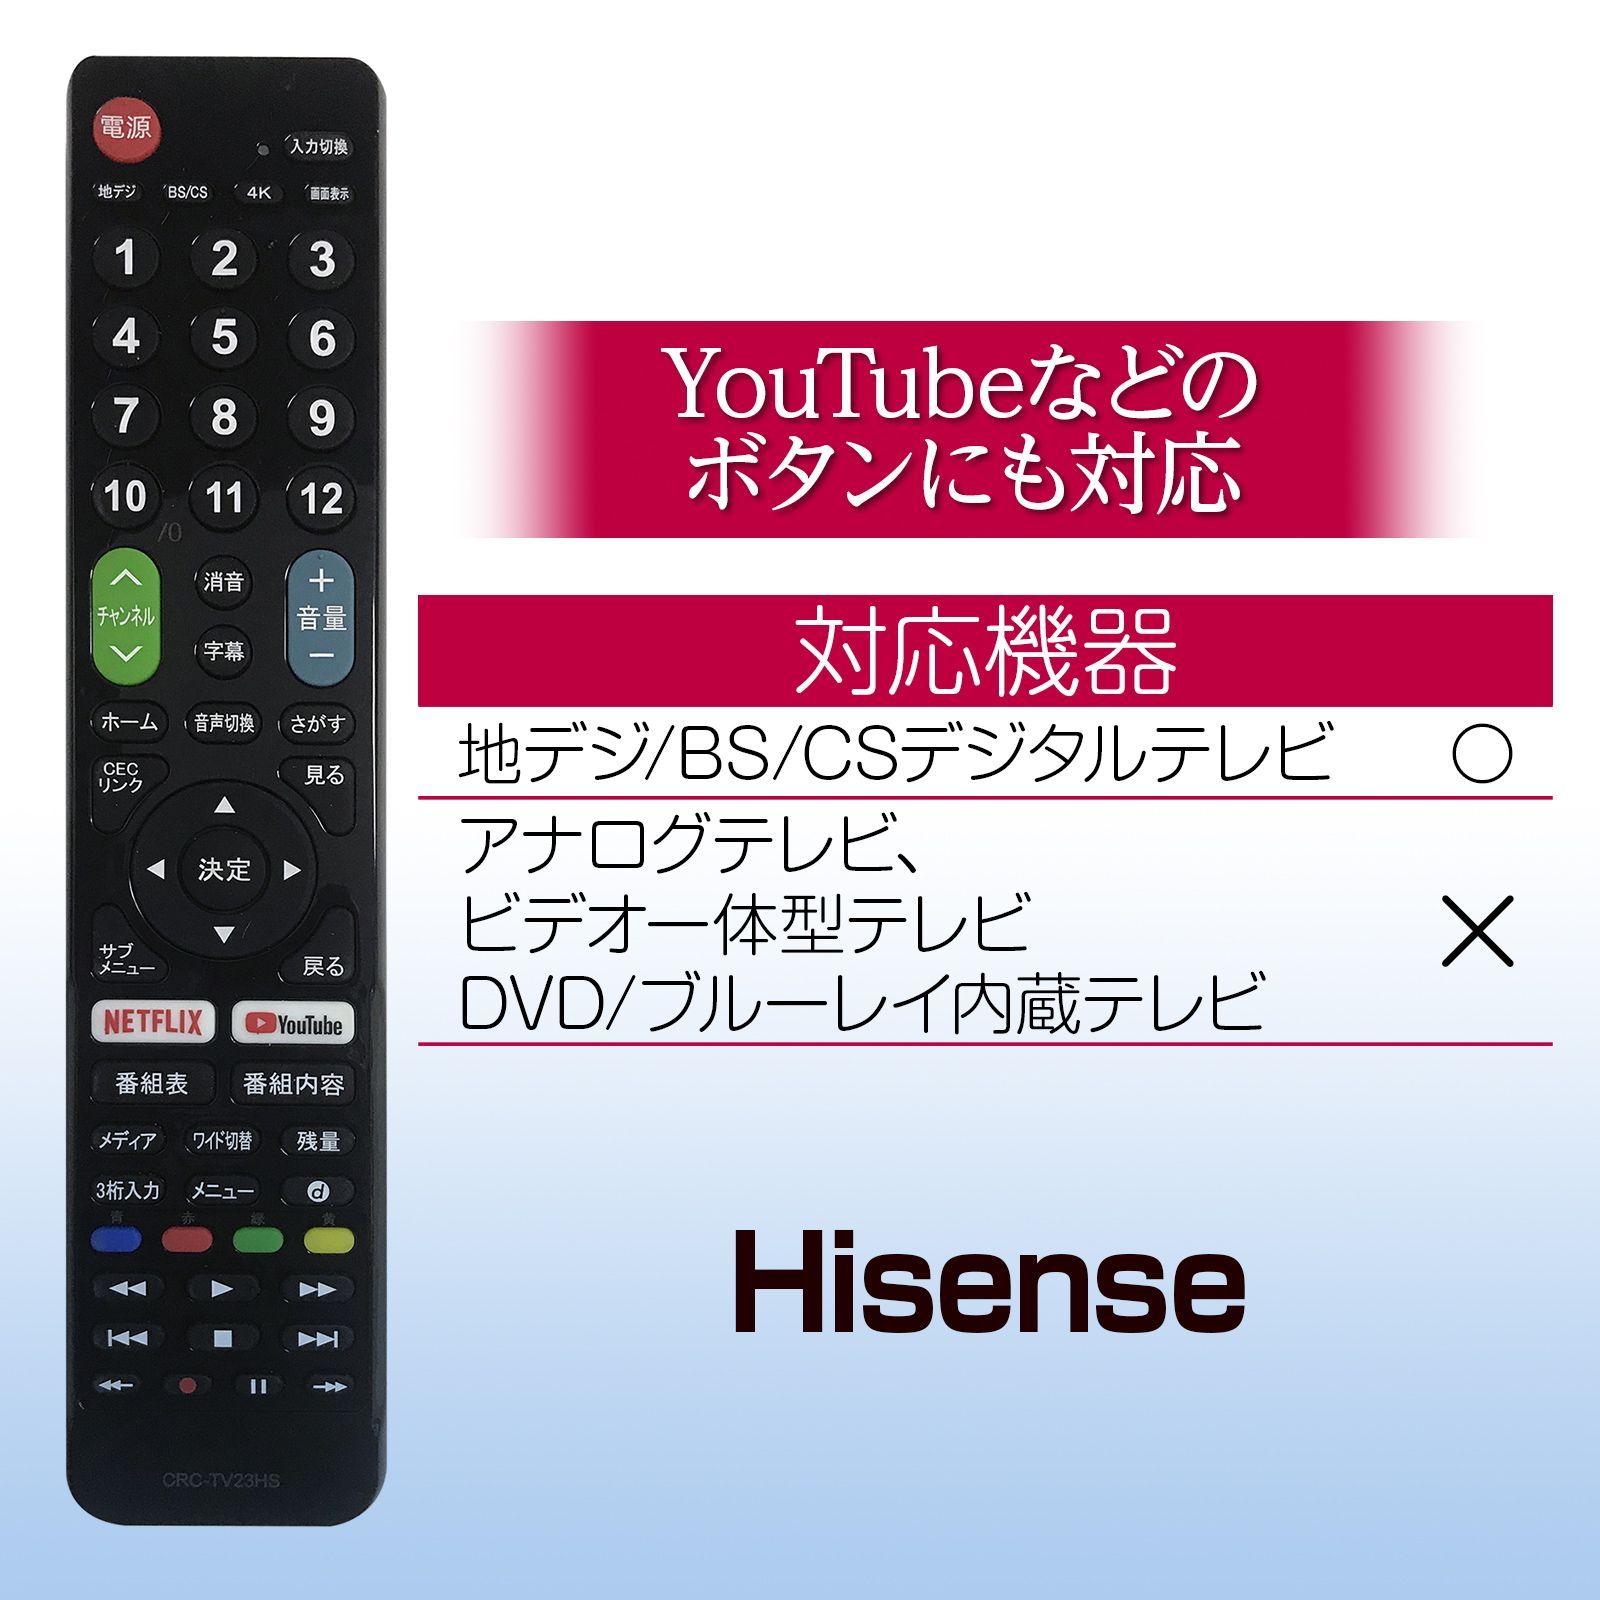 Hisense ハイセンス テレビリモコン crctv23hs 設定不要 互換 液晶テレビ 汎用 レグザ テレビ用 リモコン汎用 簡単 - メルカリ